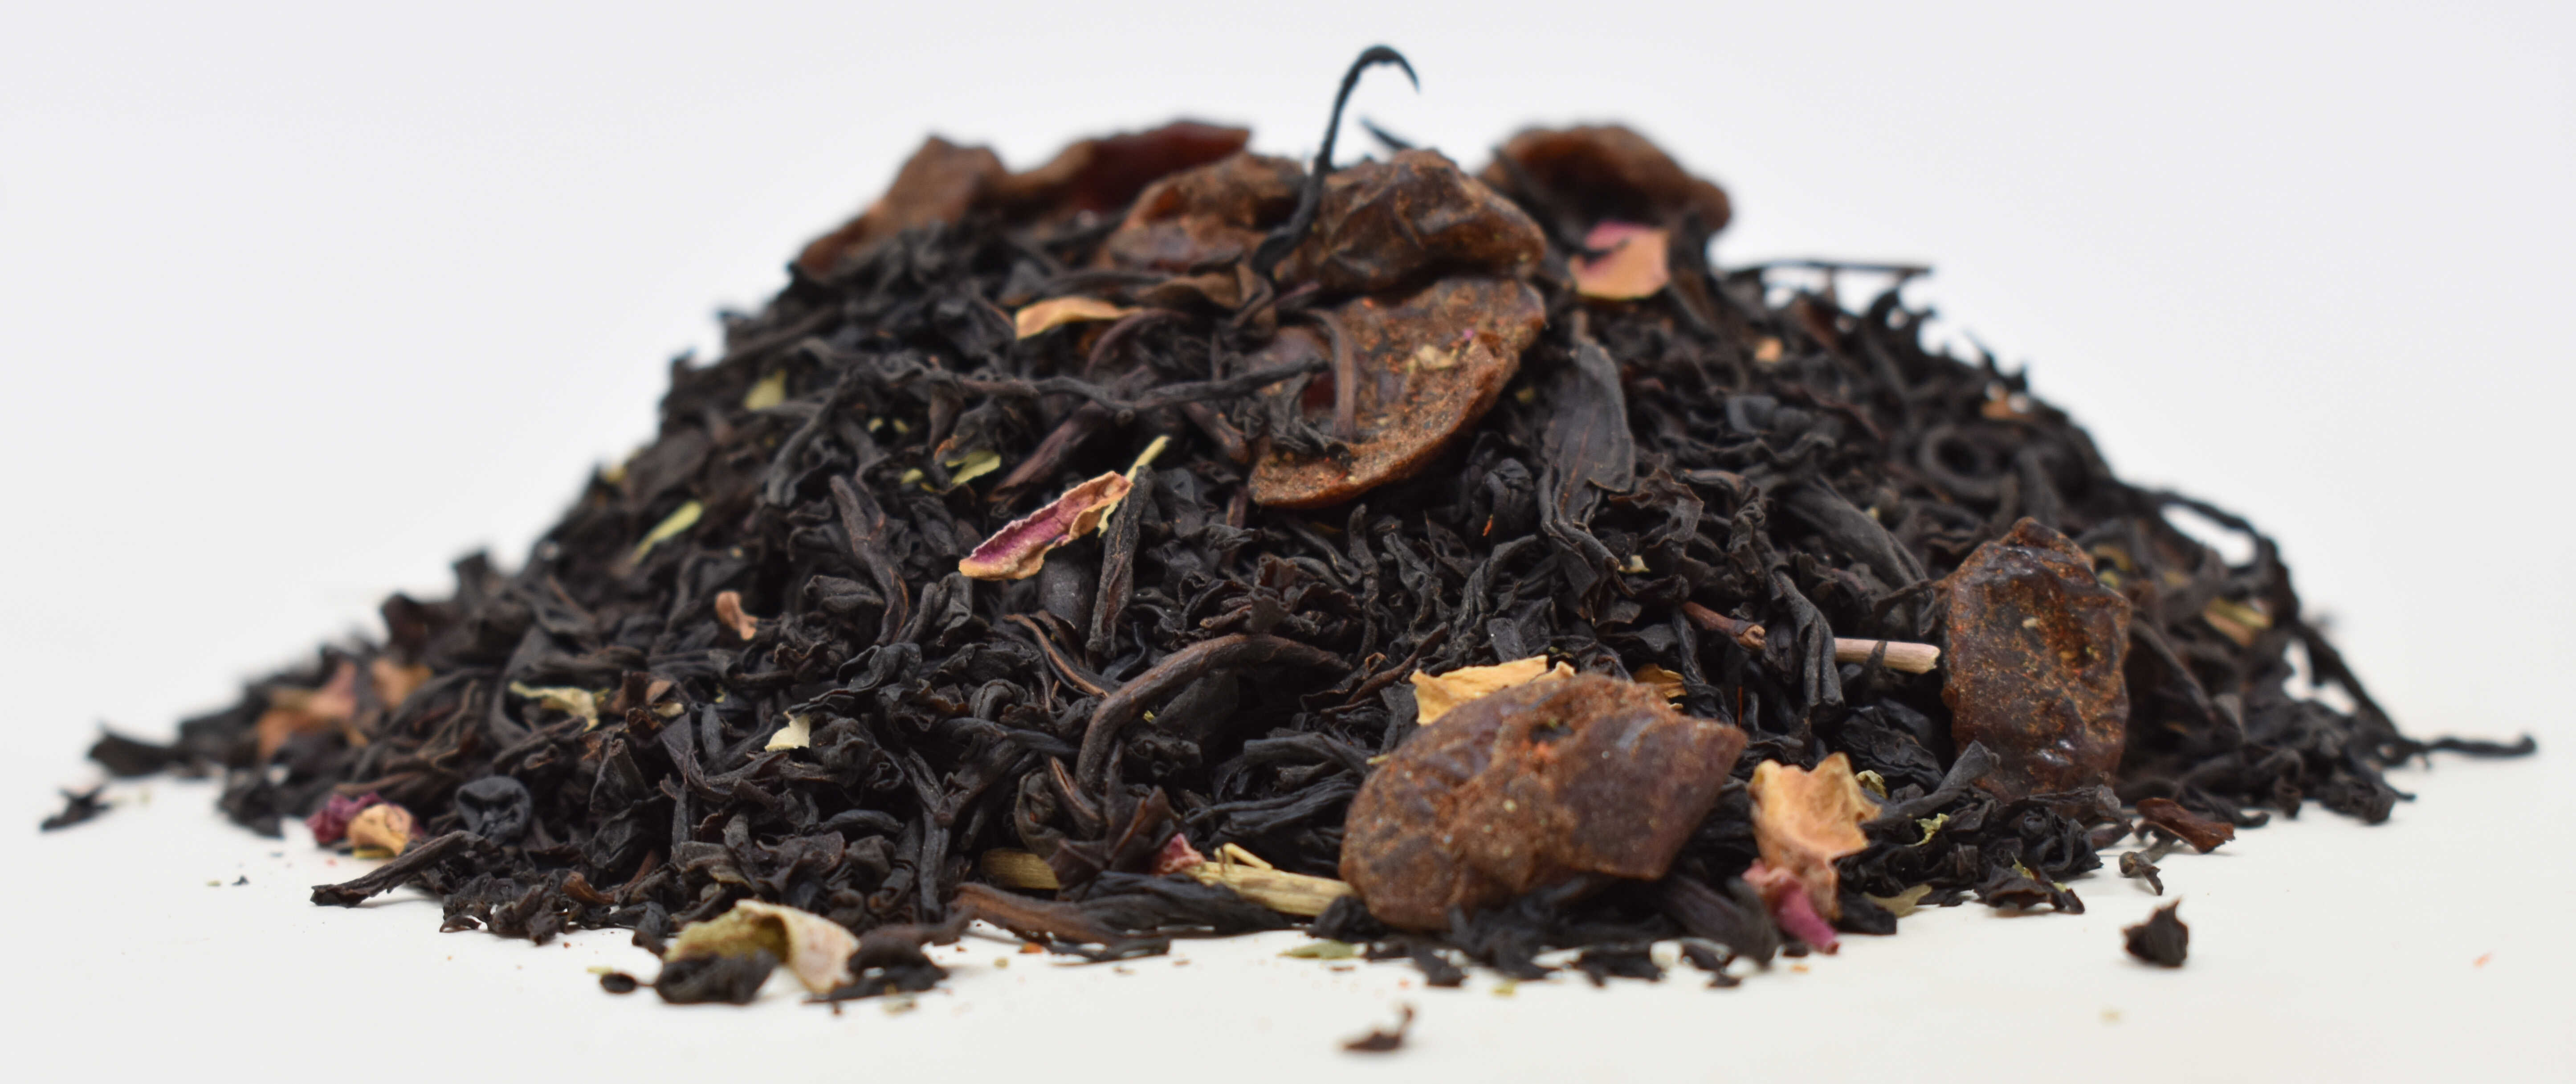 Red Currant Black Tea - Side Photo